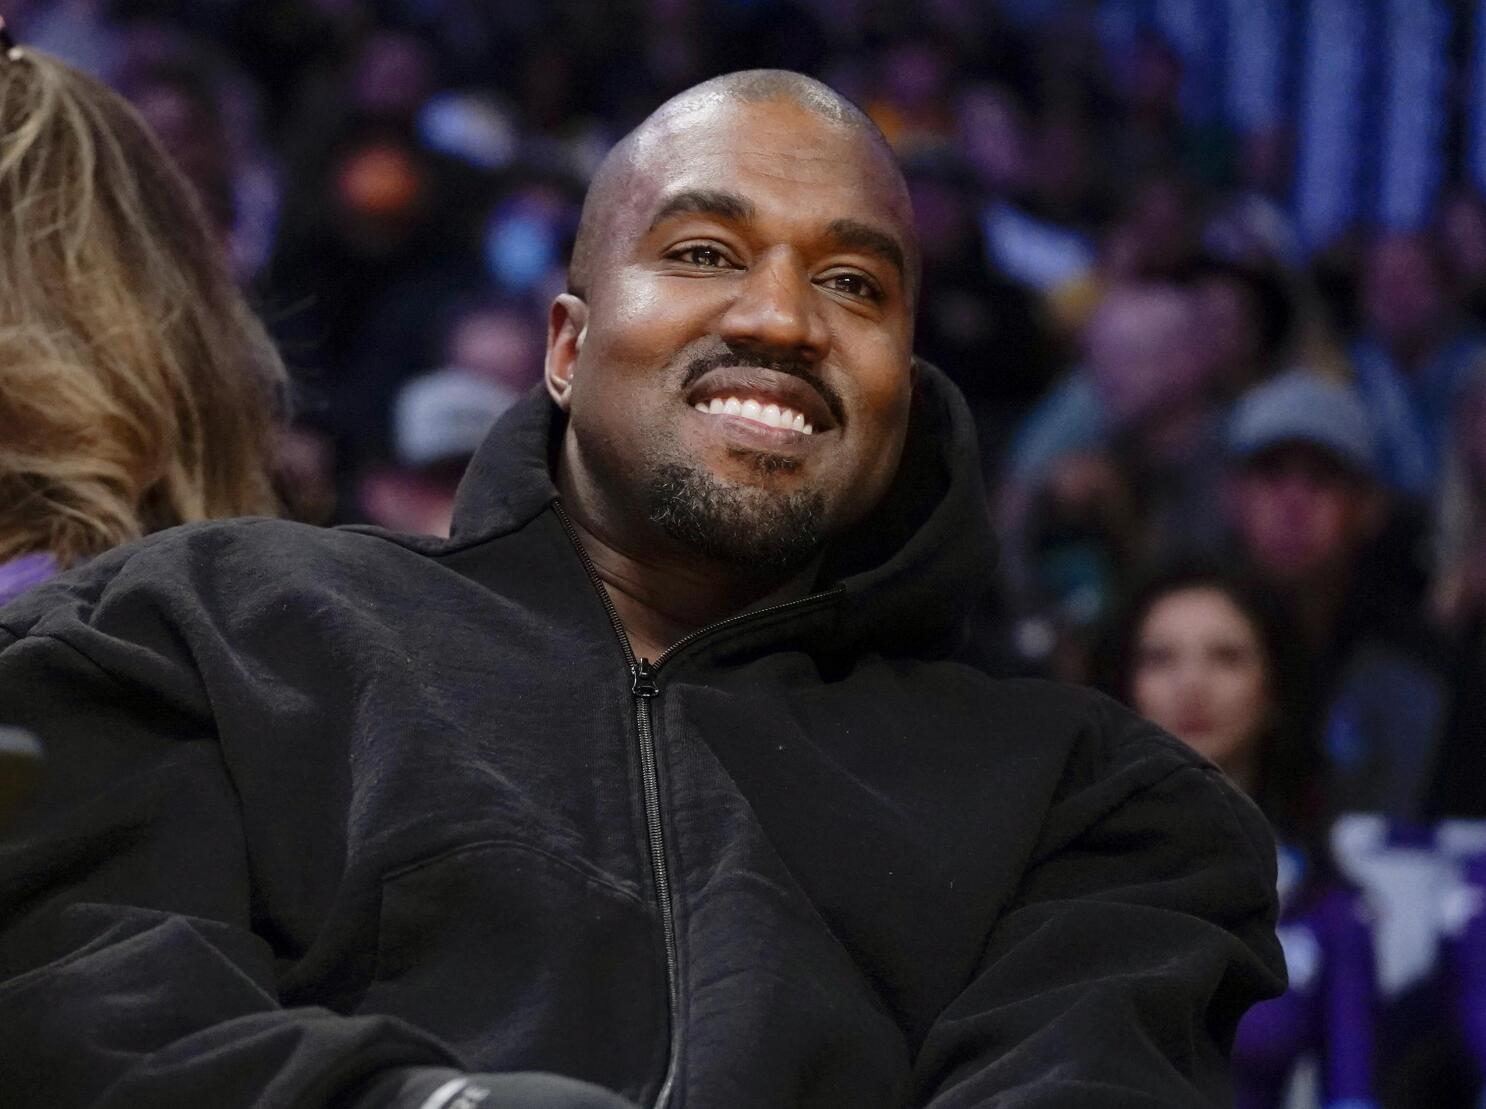 Kanye West had disturbing antisemitic streak at Adidas: report